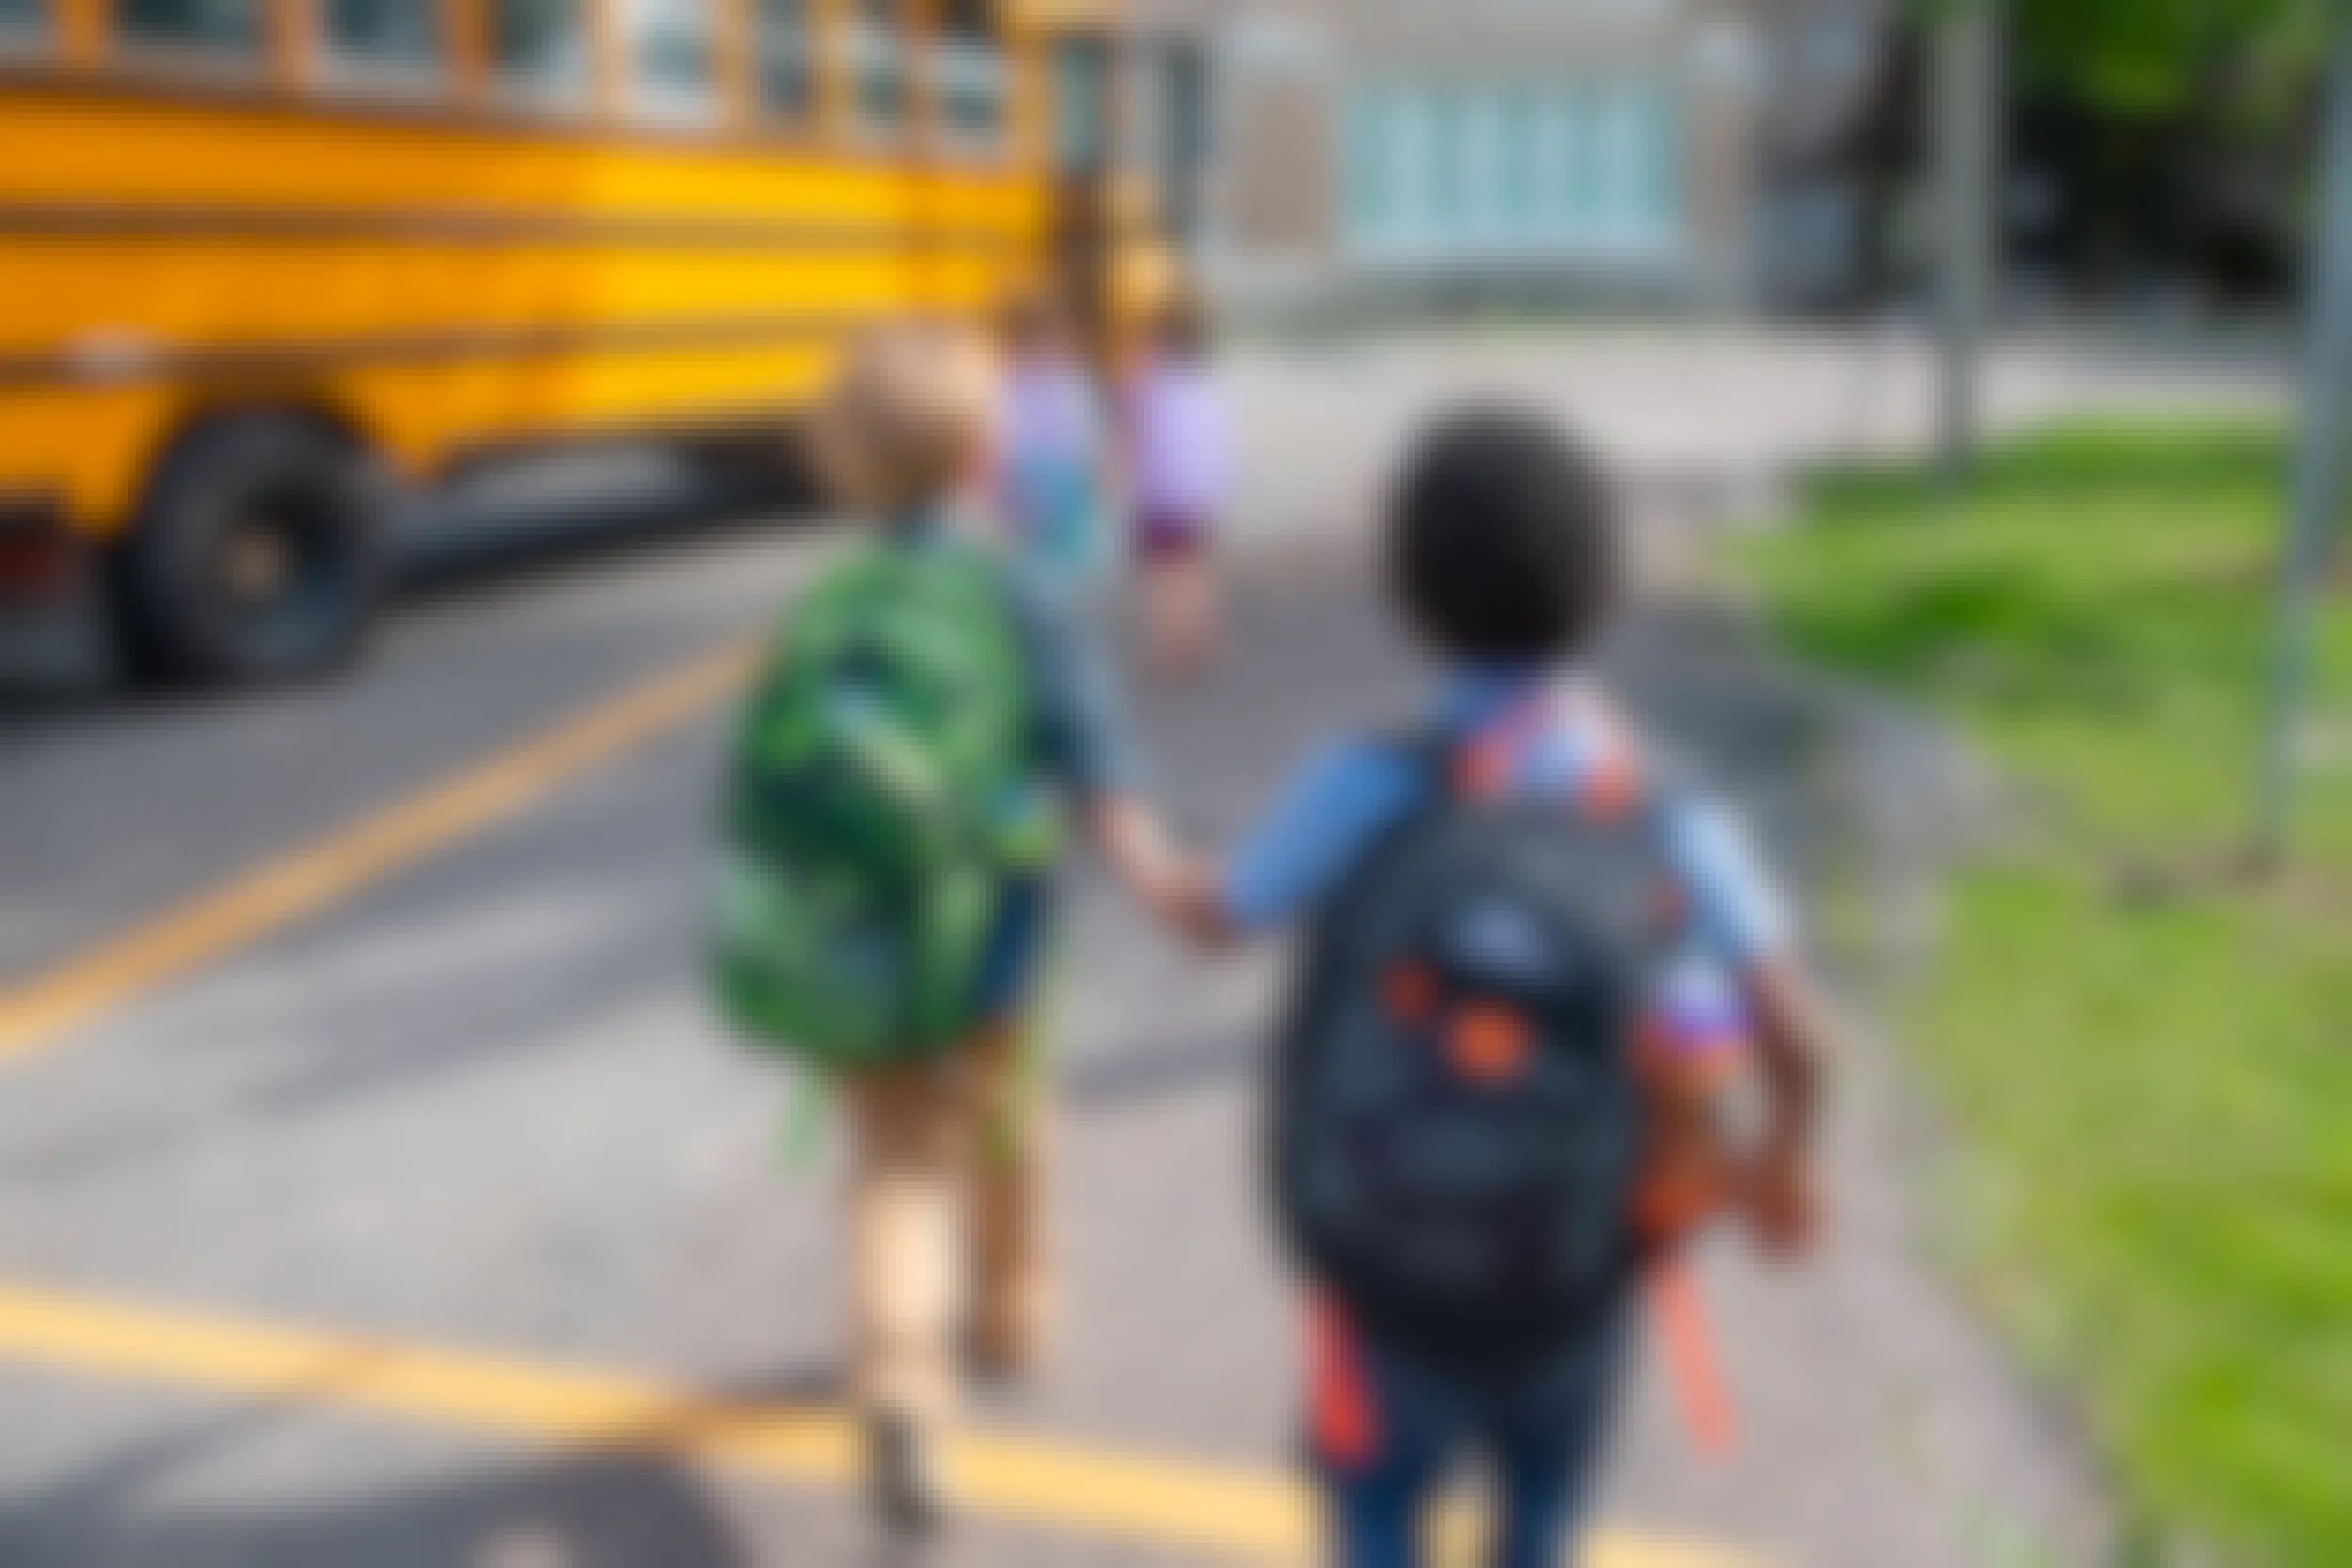 Two kids wearing High Sierra backpacks, holding hands and walking toward a school bus.